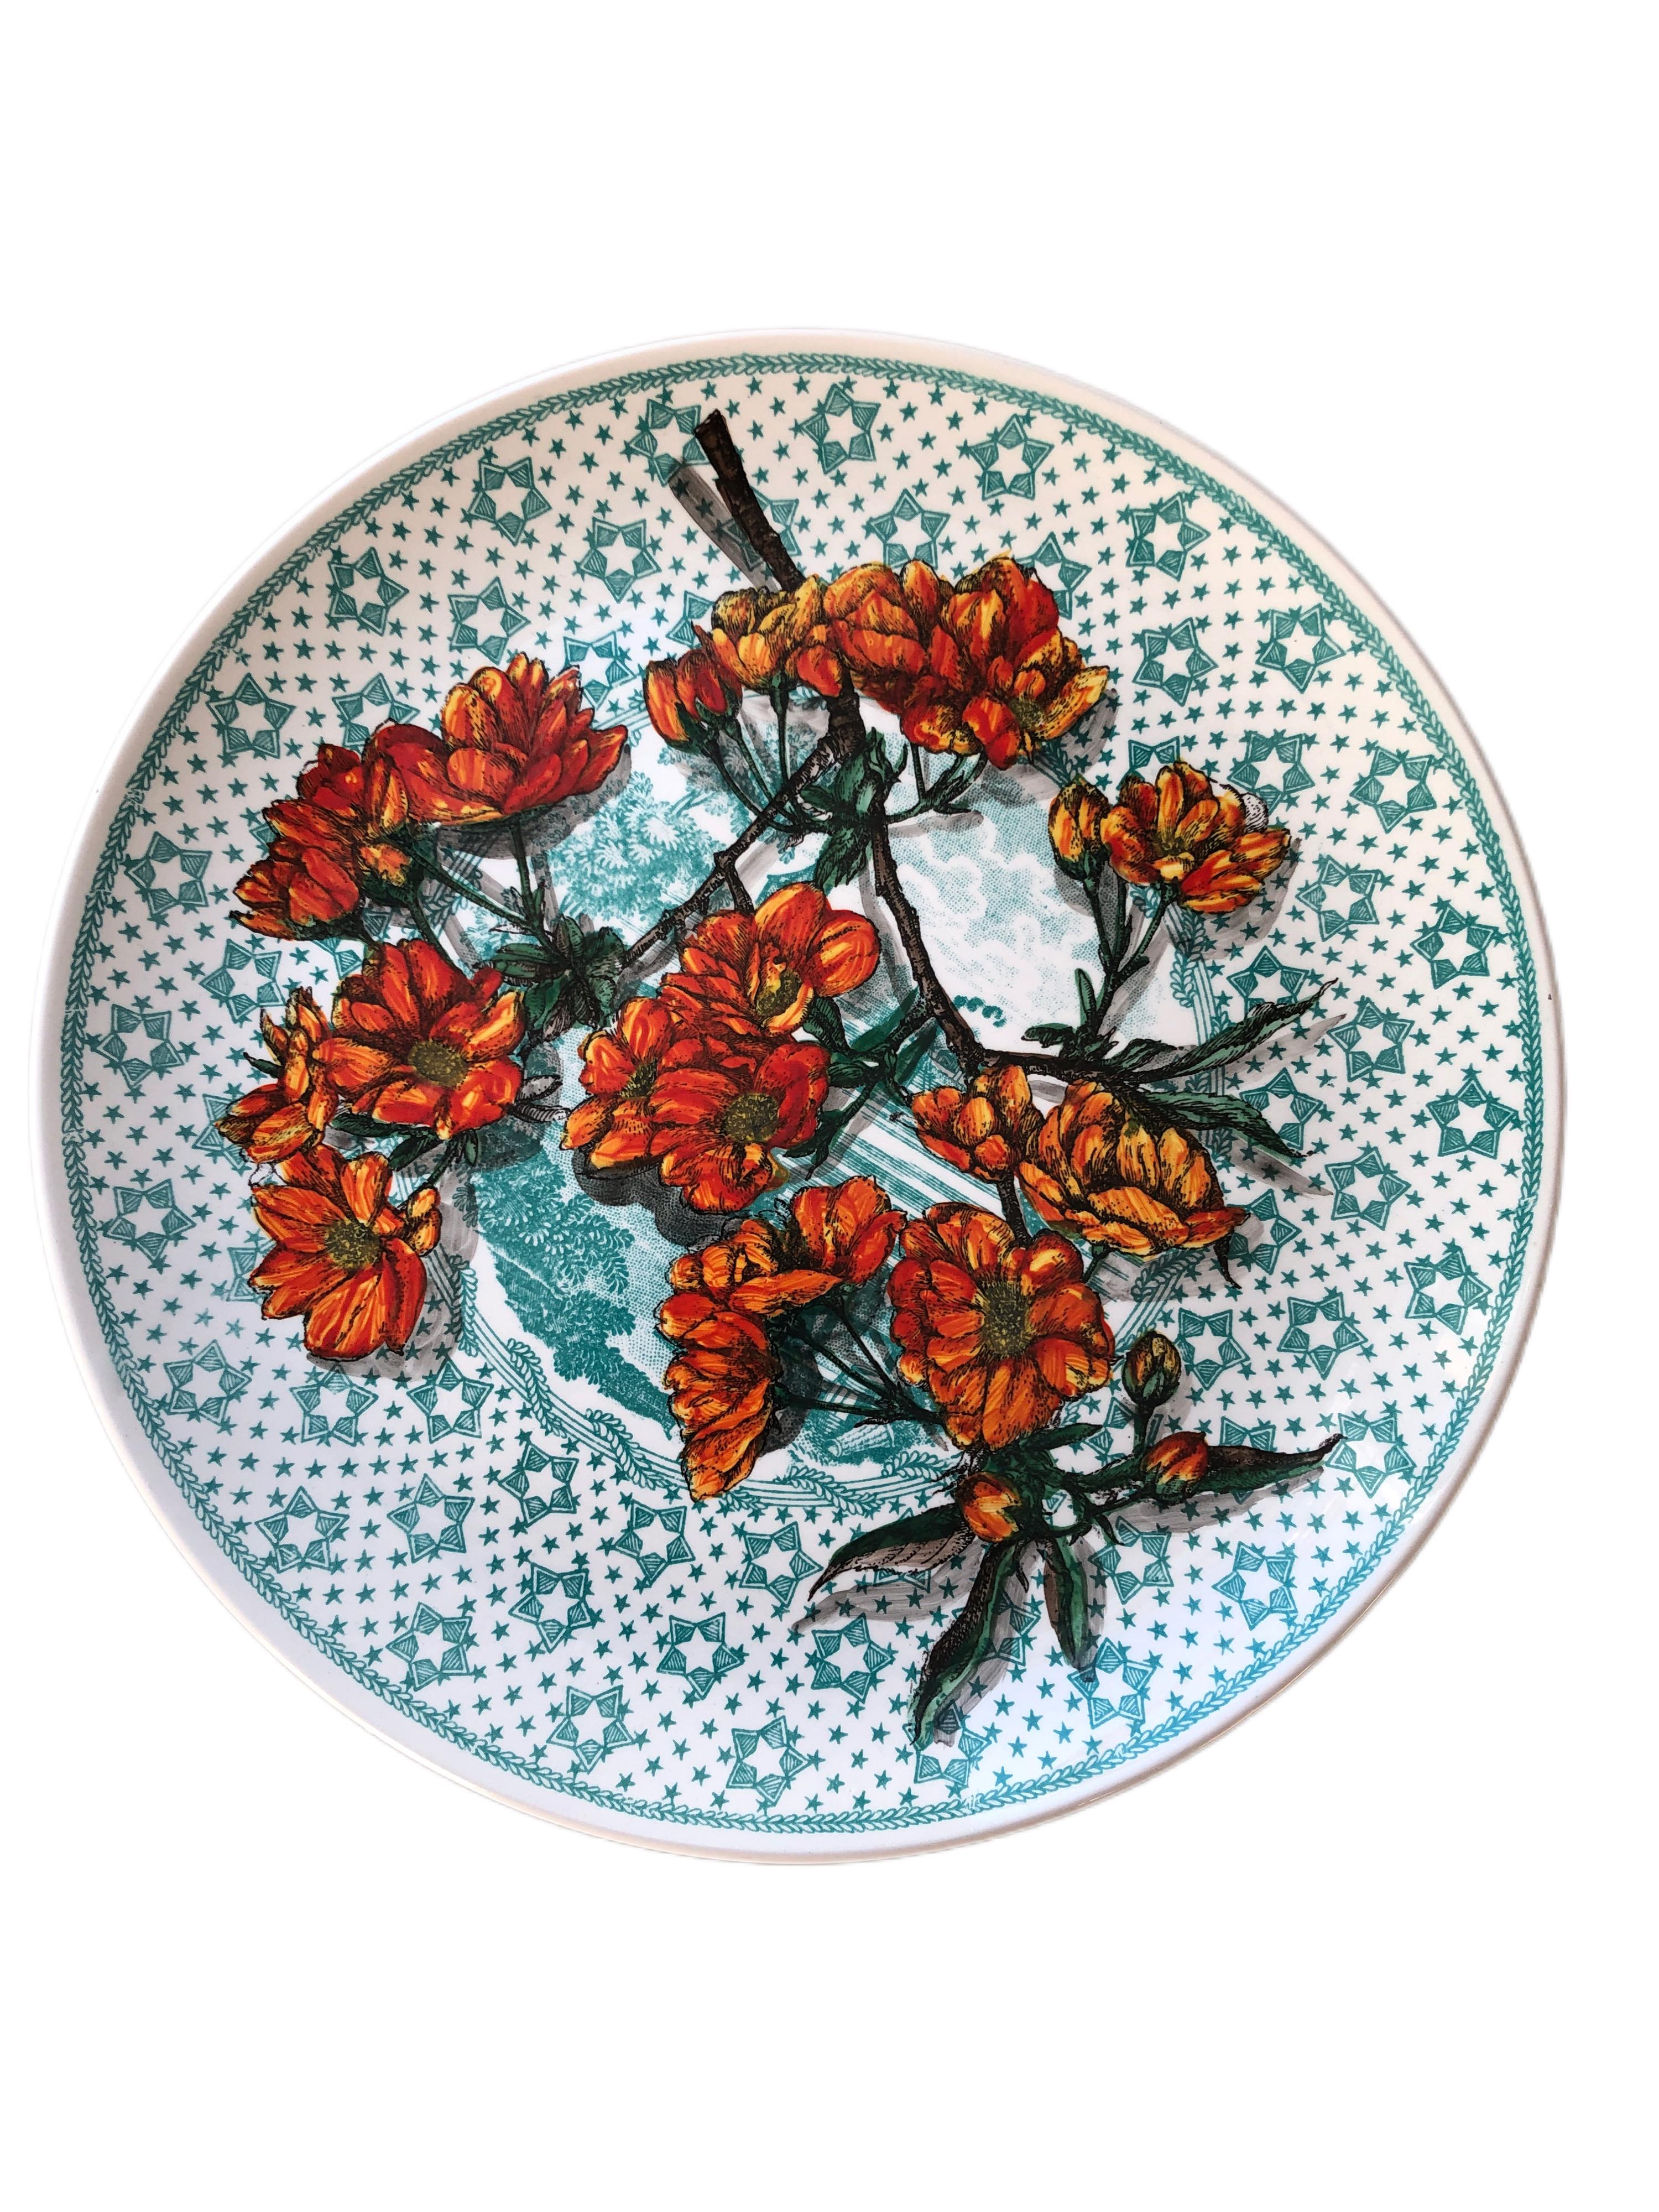 Rare Six Mid-Century Modern Handpainted Plates by Piero Fornasetti, 